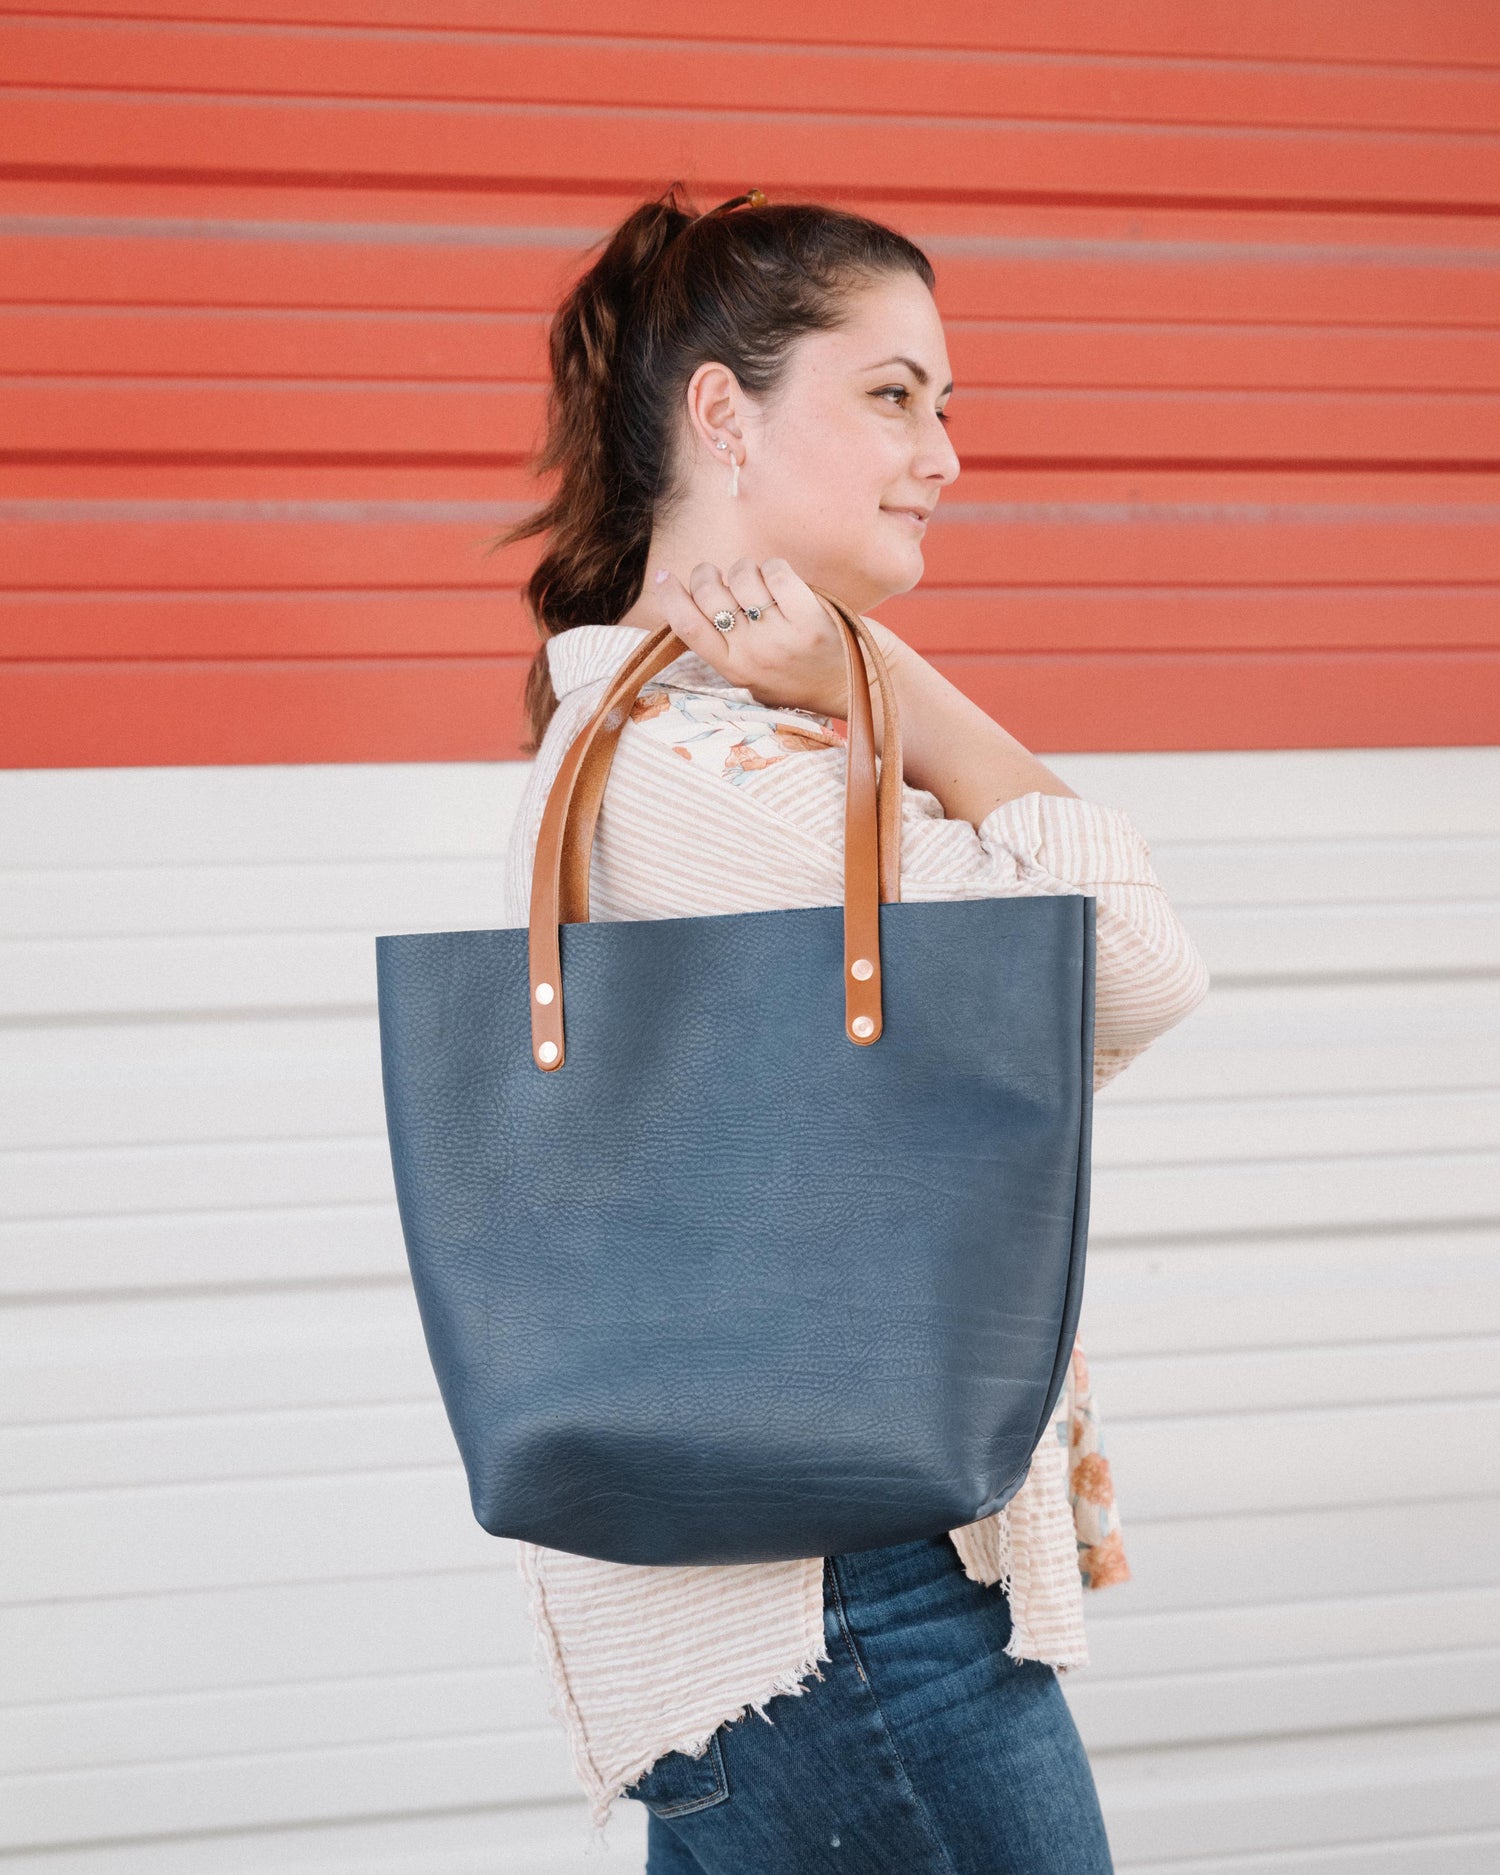 Unique Denim Handbags | Handmade Leather Bags | She-Bang Shop